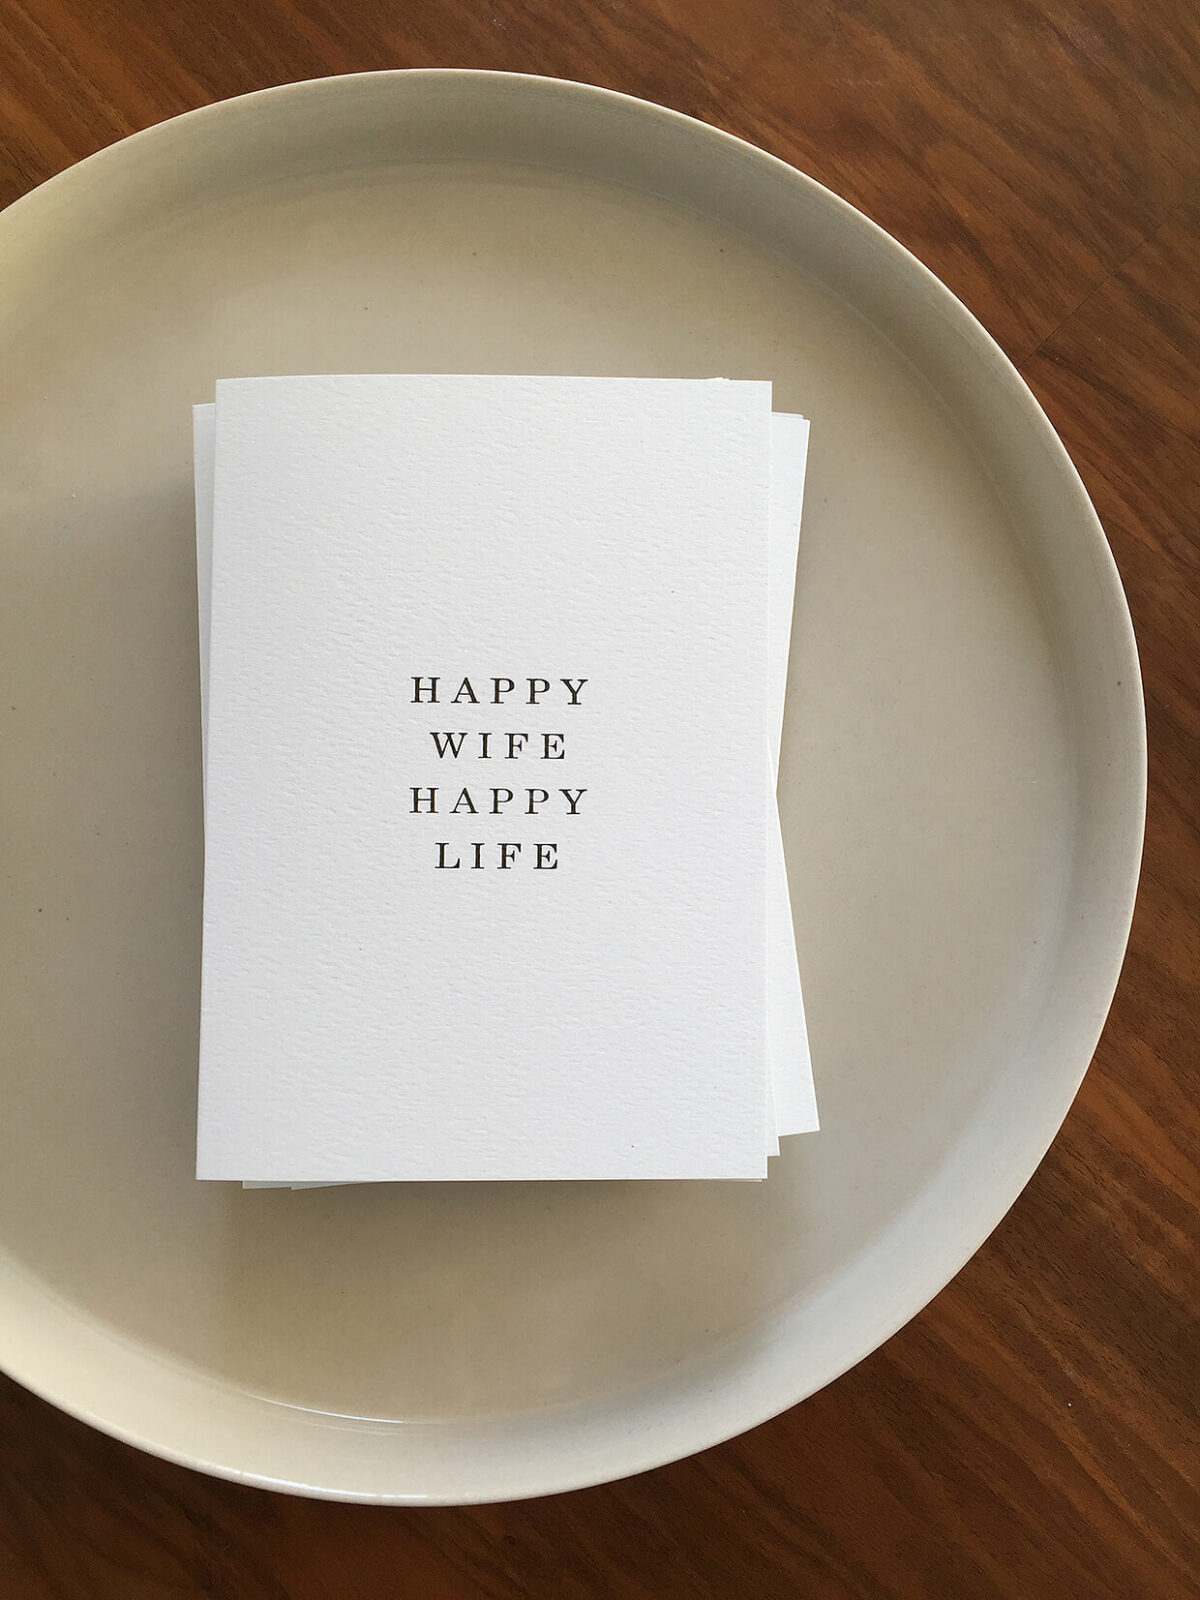 JOYEM_Greeting_Card_Happy_Wife_Happy_Life_Product_Image